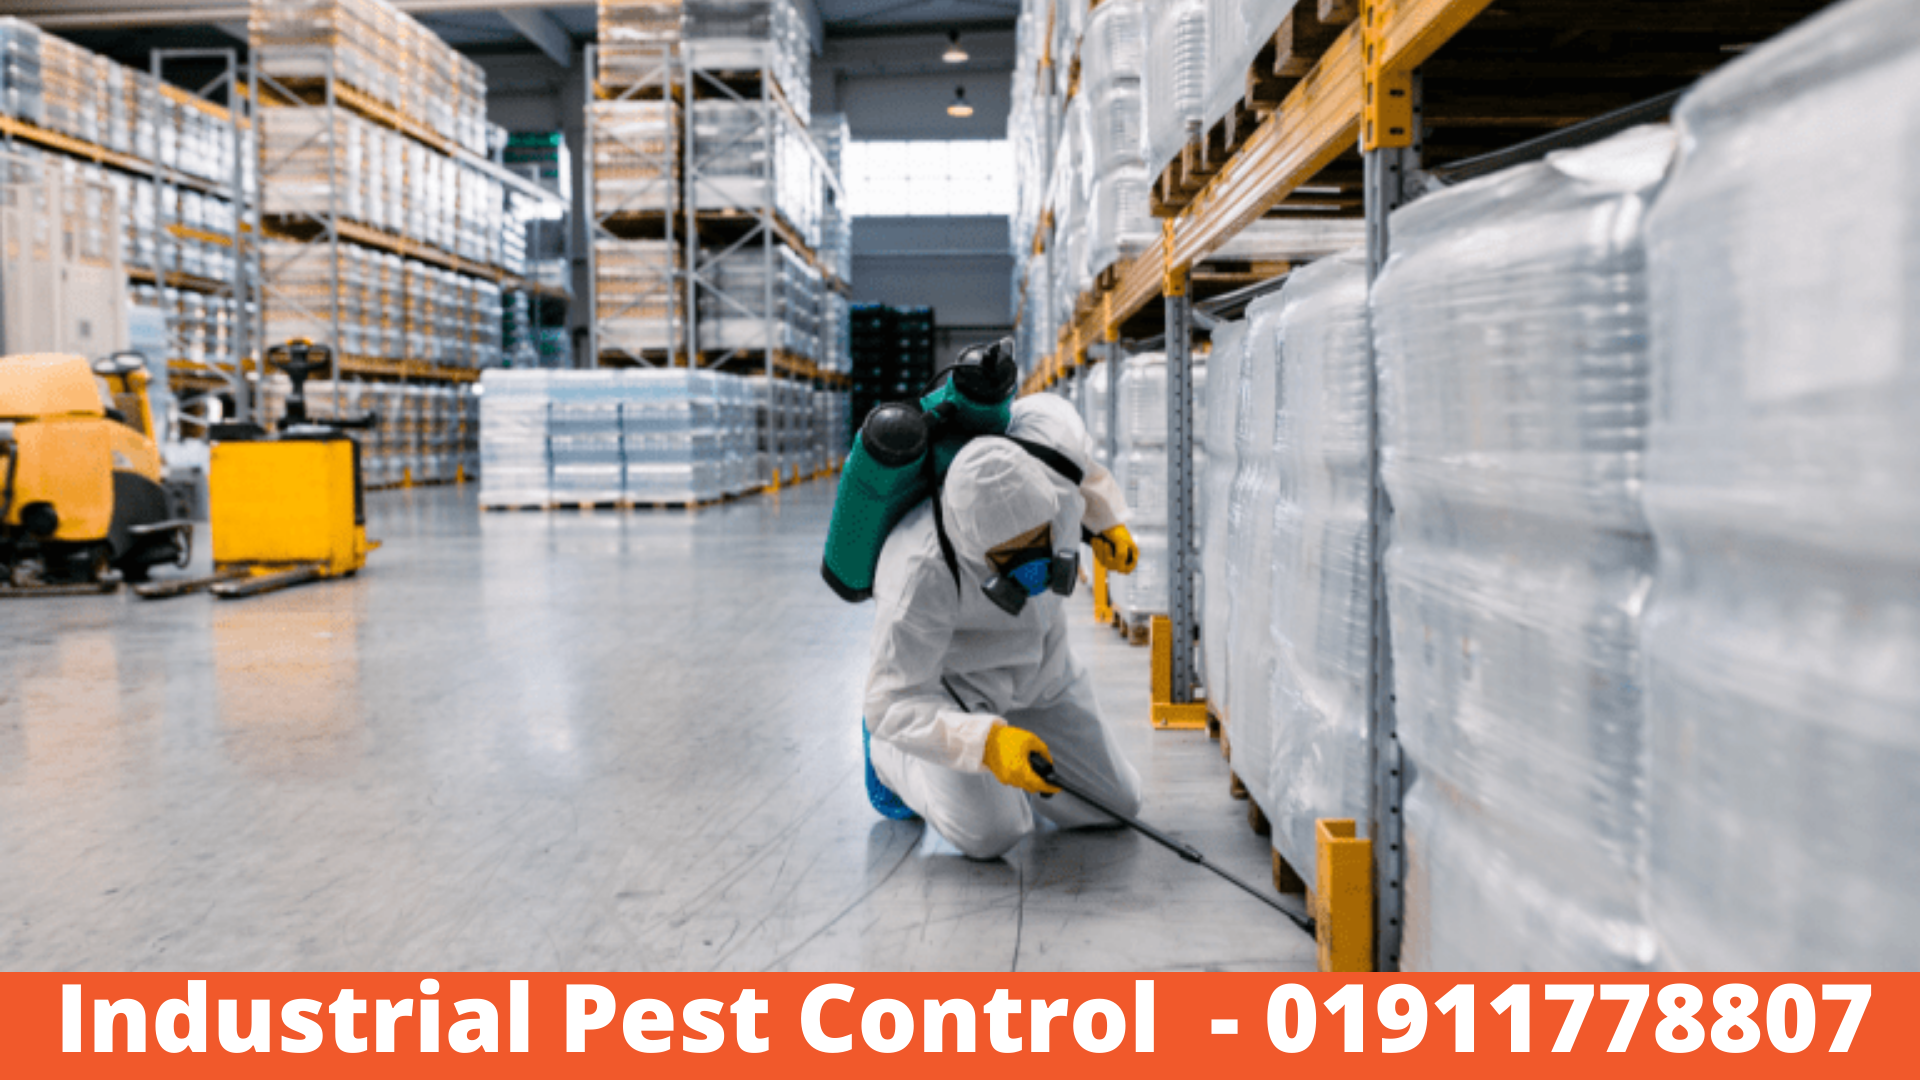 Industrial Pest Control - Pest Control Services BD